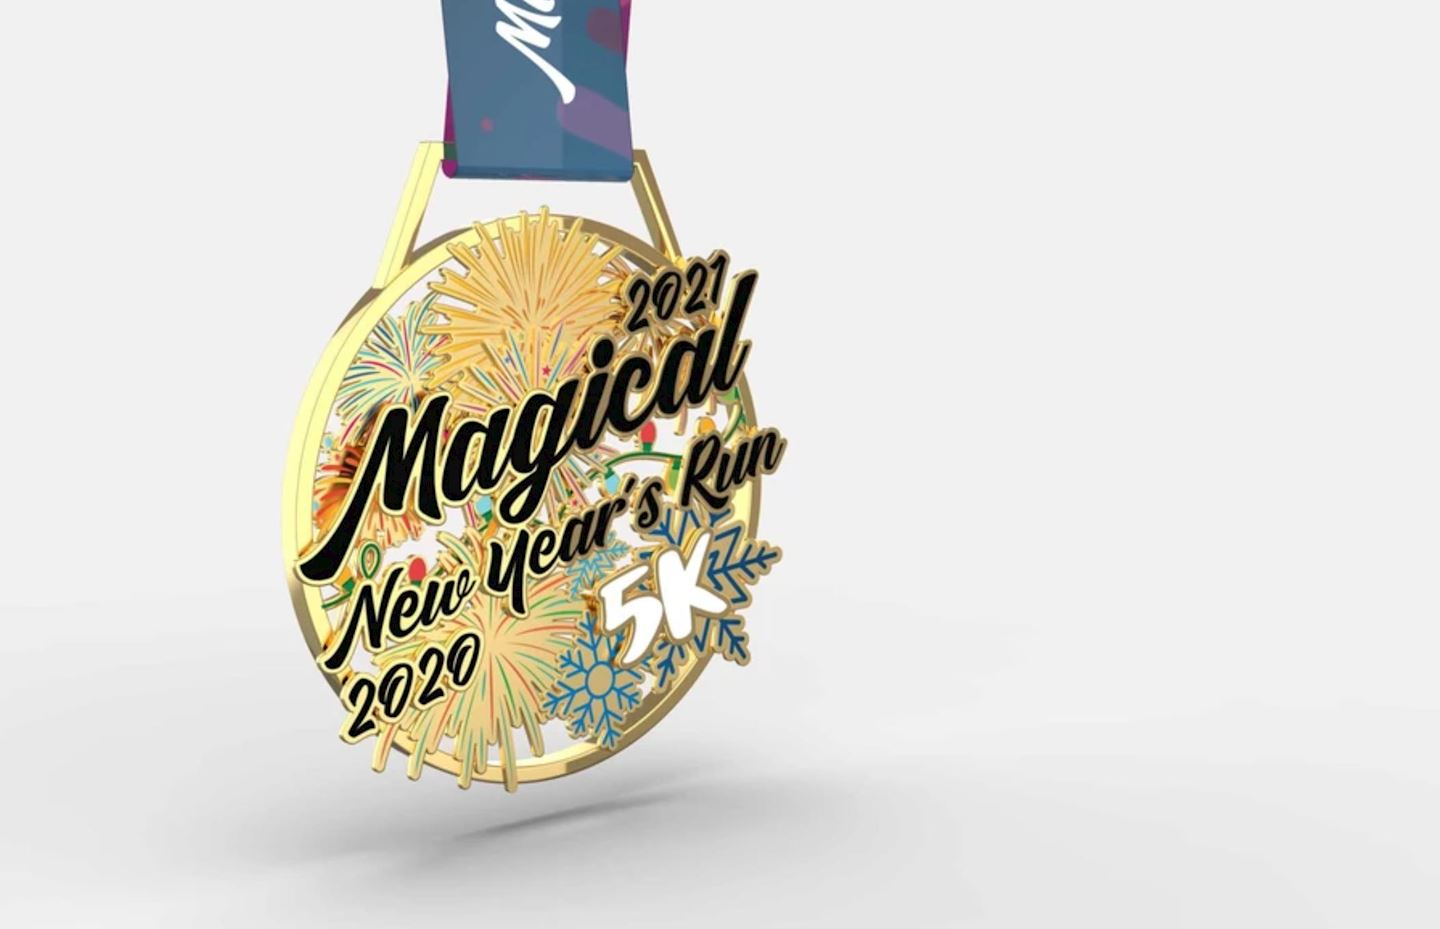 Magical New Year's Eve Run World's Marathons